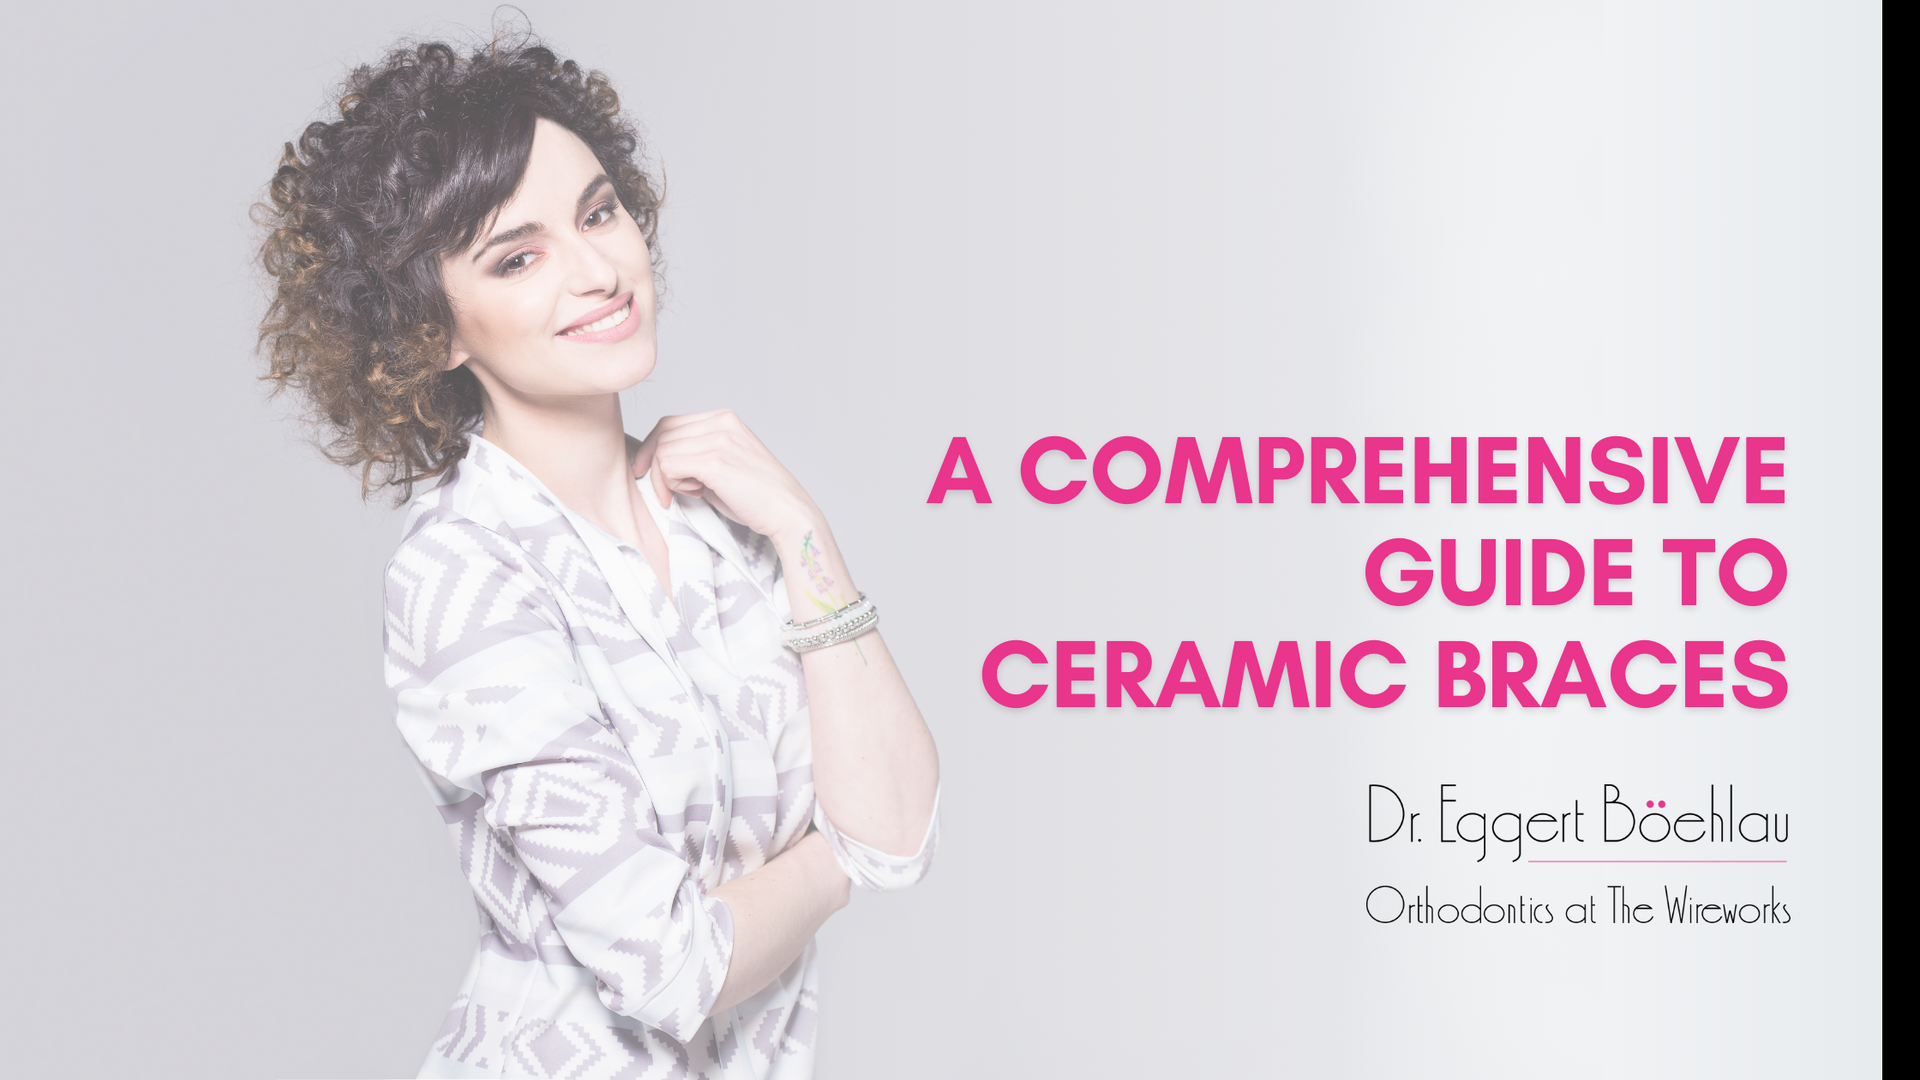 a comprehensive guide to ceramic braces by dr. eggert boellmann